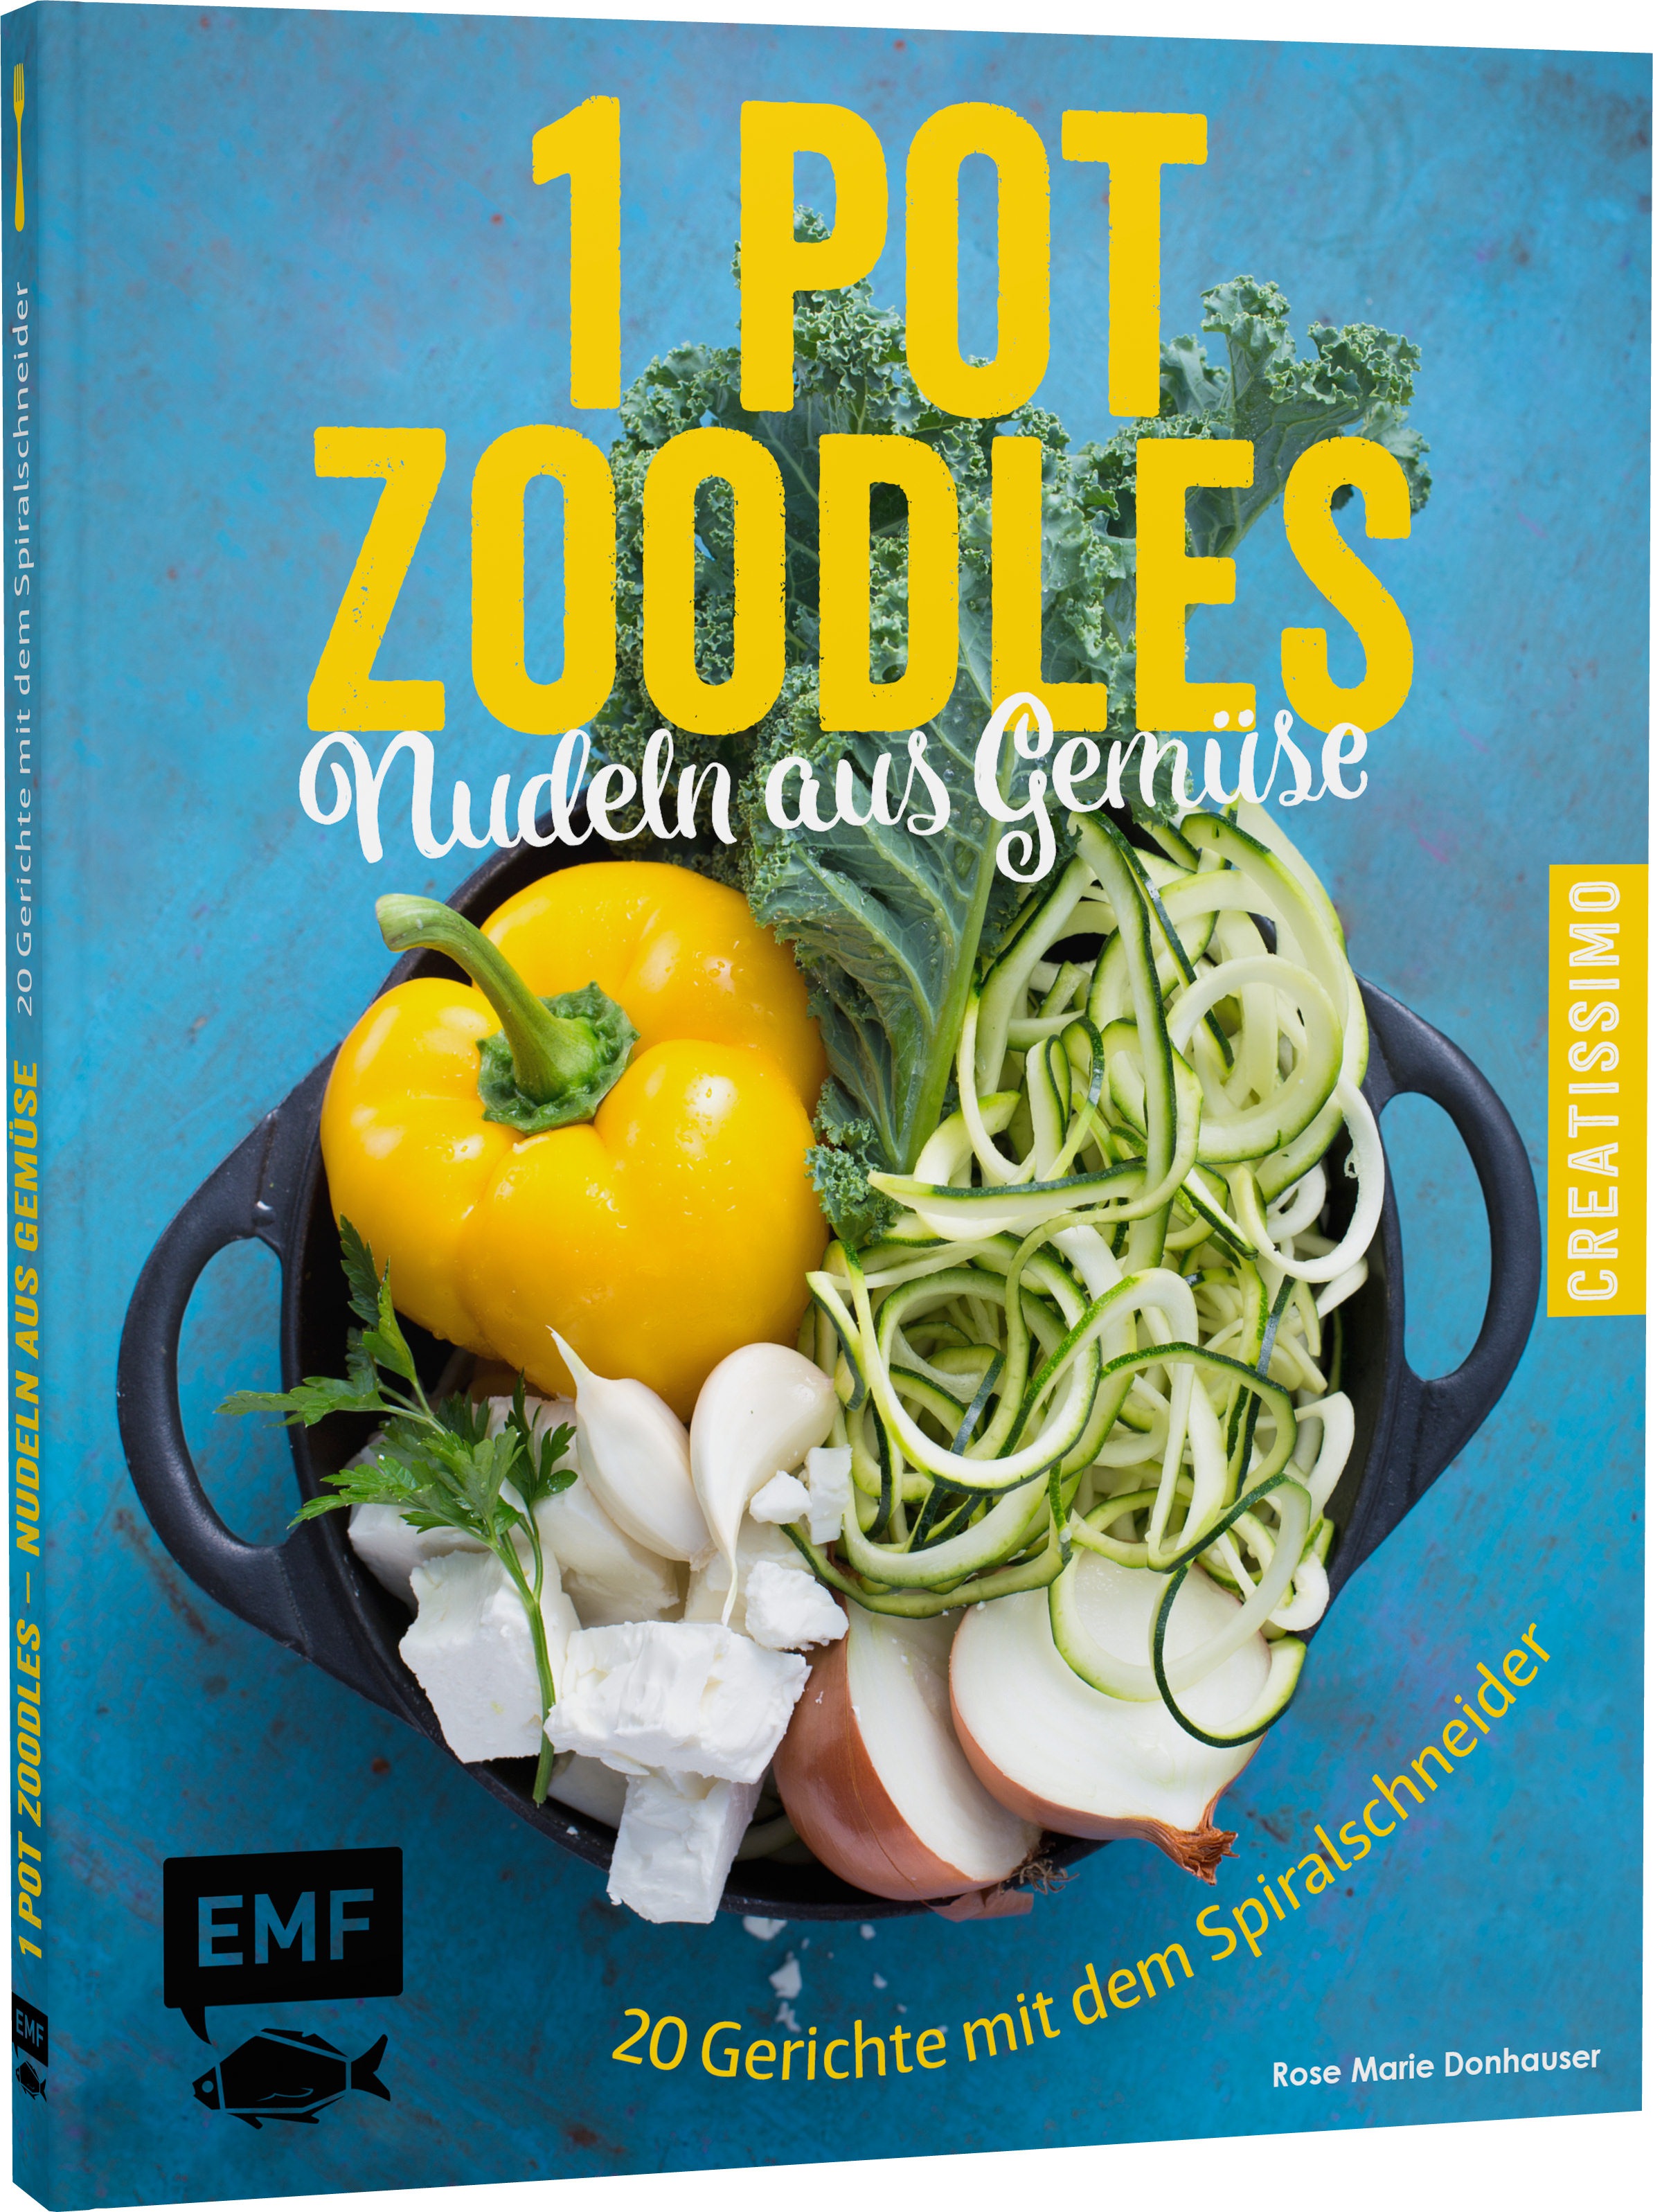 Rose Marie Donhauser - One Pot Zoodles - Nudeln aus Gemüse